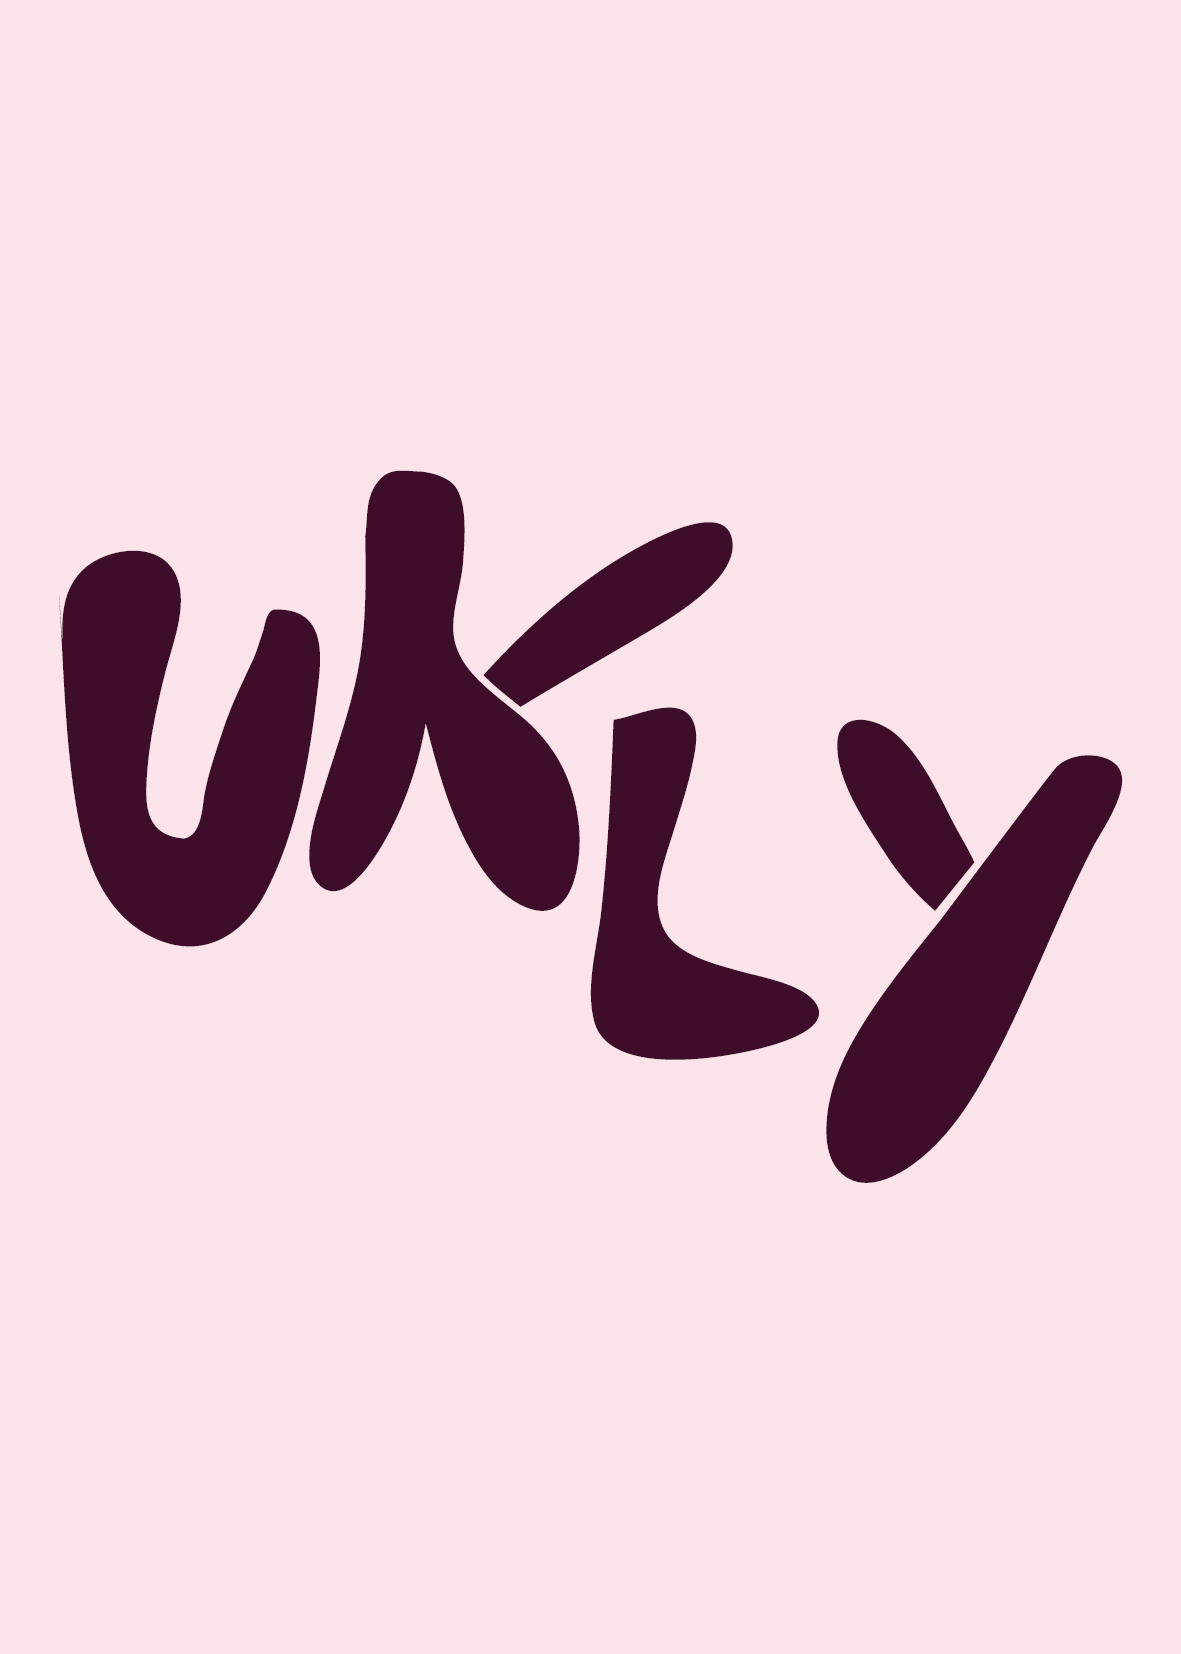 ukly_logo.jpg